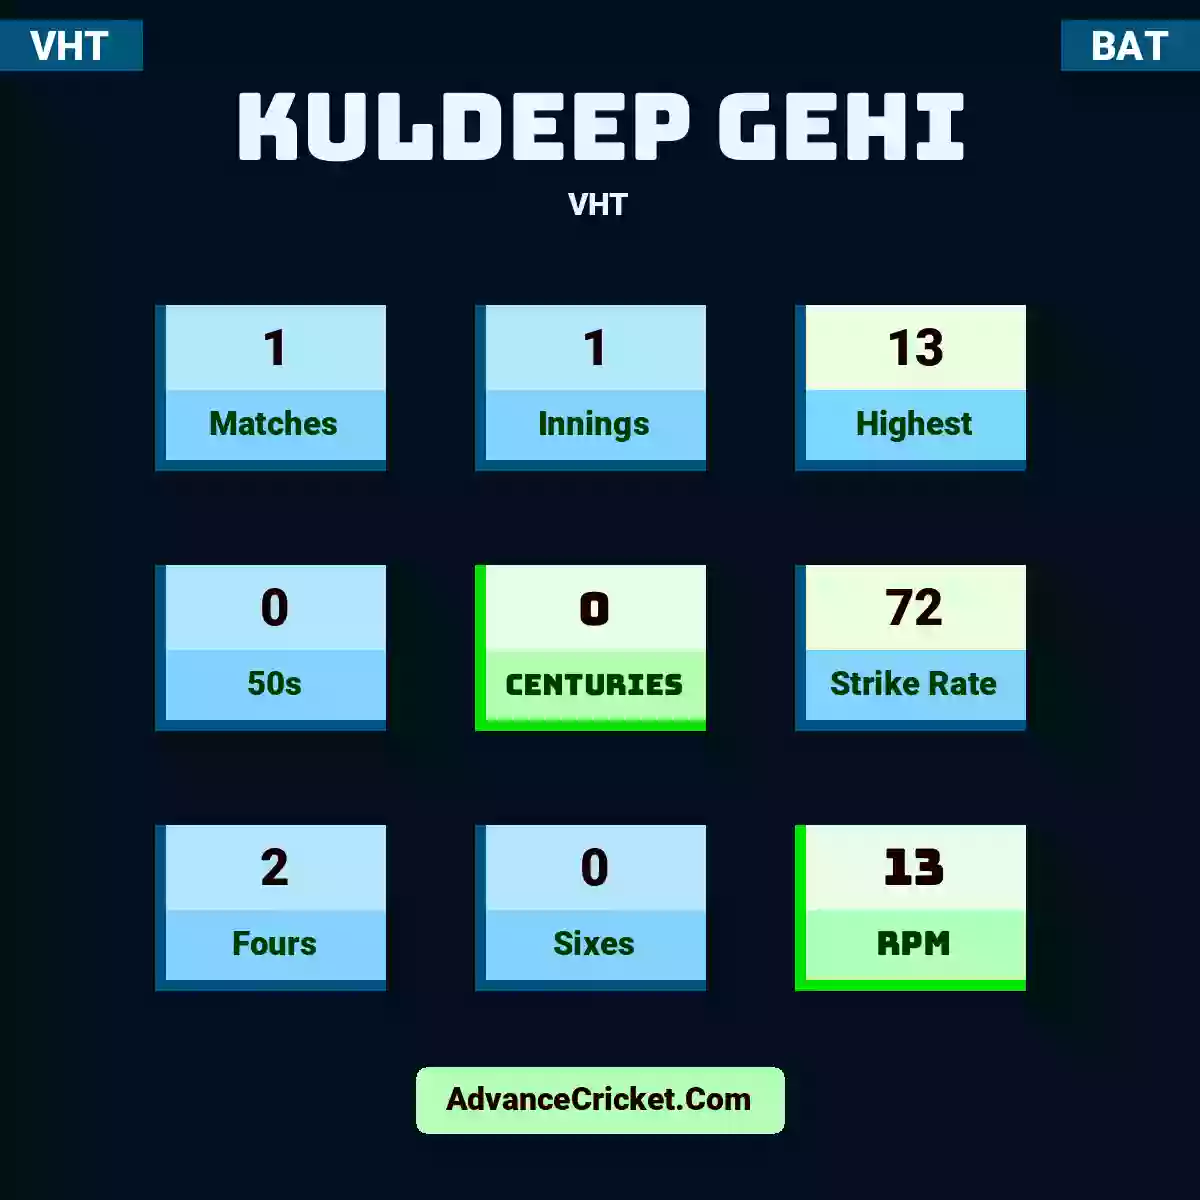 Kuldeep Gehi VHT , Kuldeep Gehi played 1 matches, scored 13 runs as highest, 0 half-centuries, and 0 centuries, with a strike rate of 72. K.Gehi hit 2 fours and 0 sixes, with an RPM of 13.